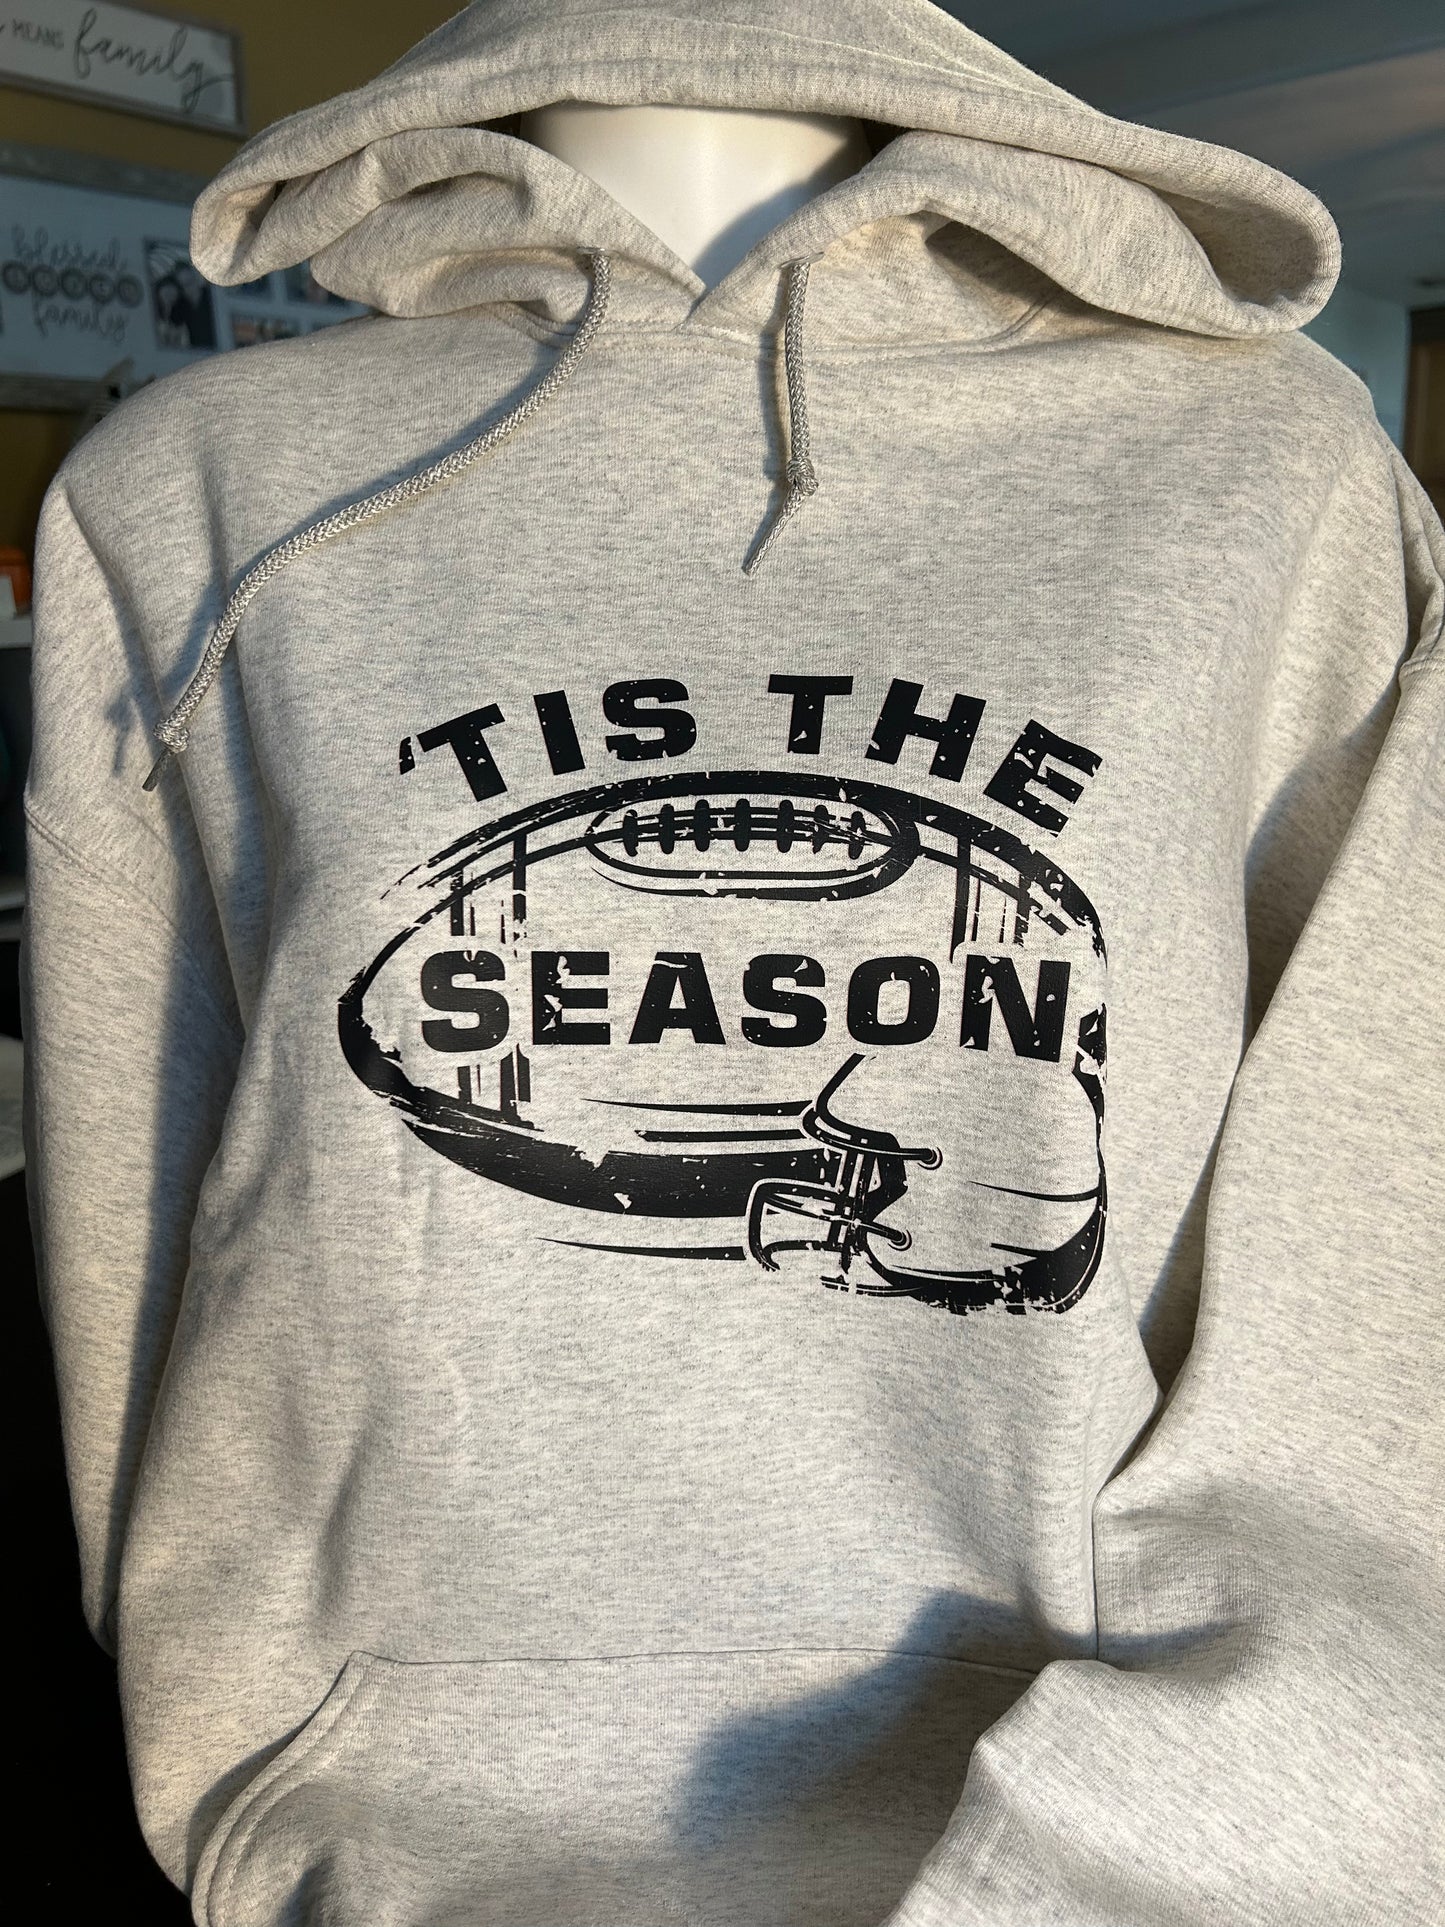 'Tis the Season Football Crewneck Sweater or Pullover Hoodie